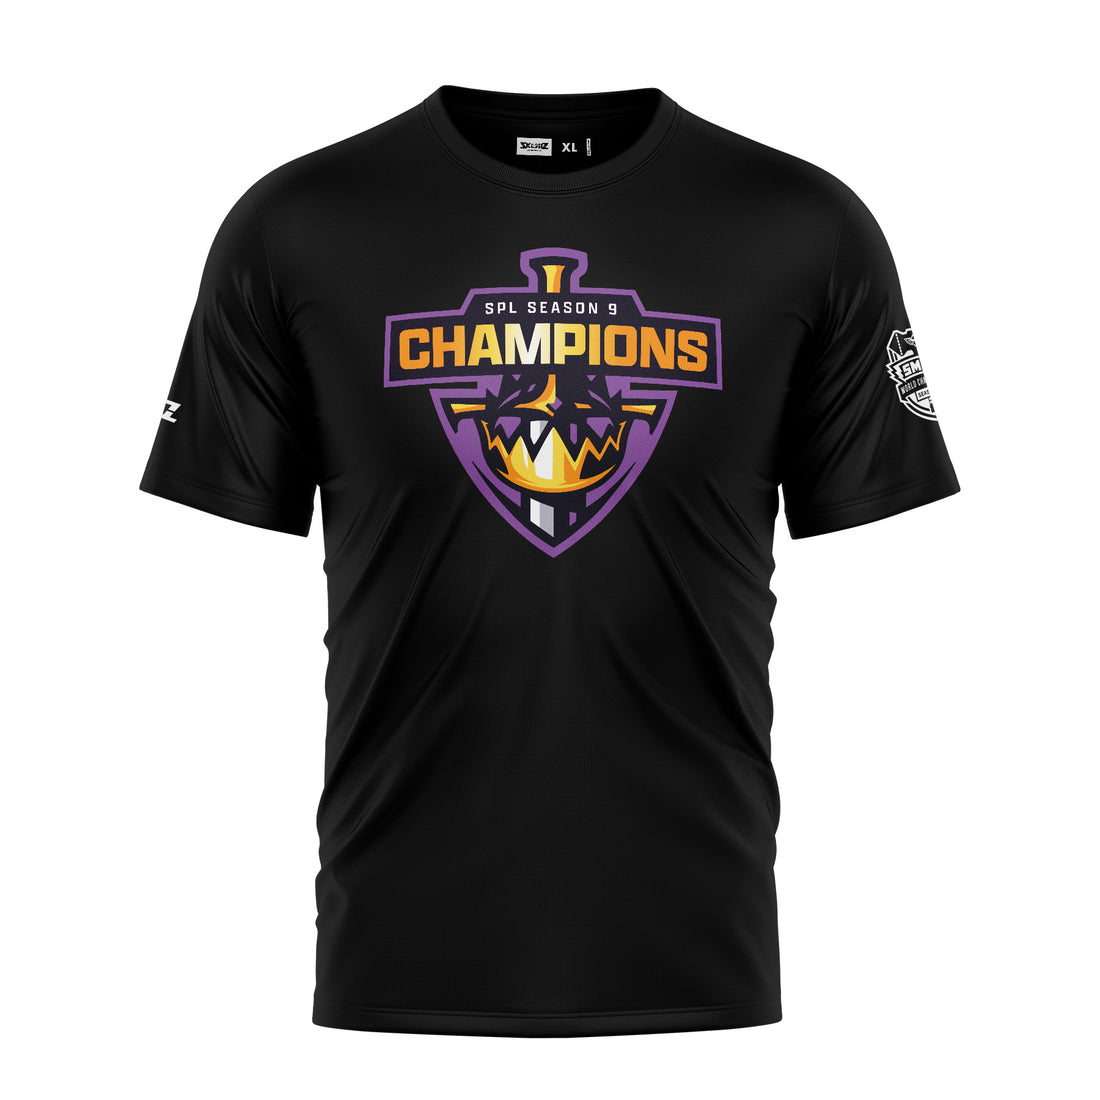 SWC Champions - Season 9 - T-shirt (tri-blend)